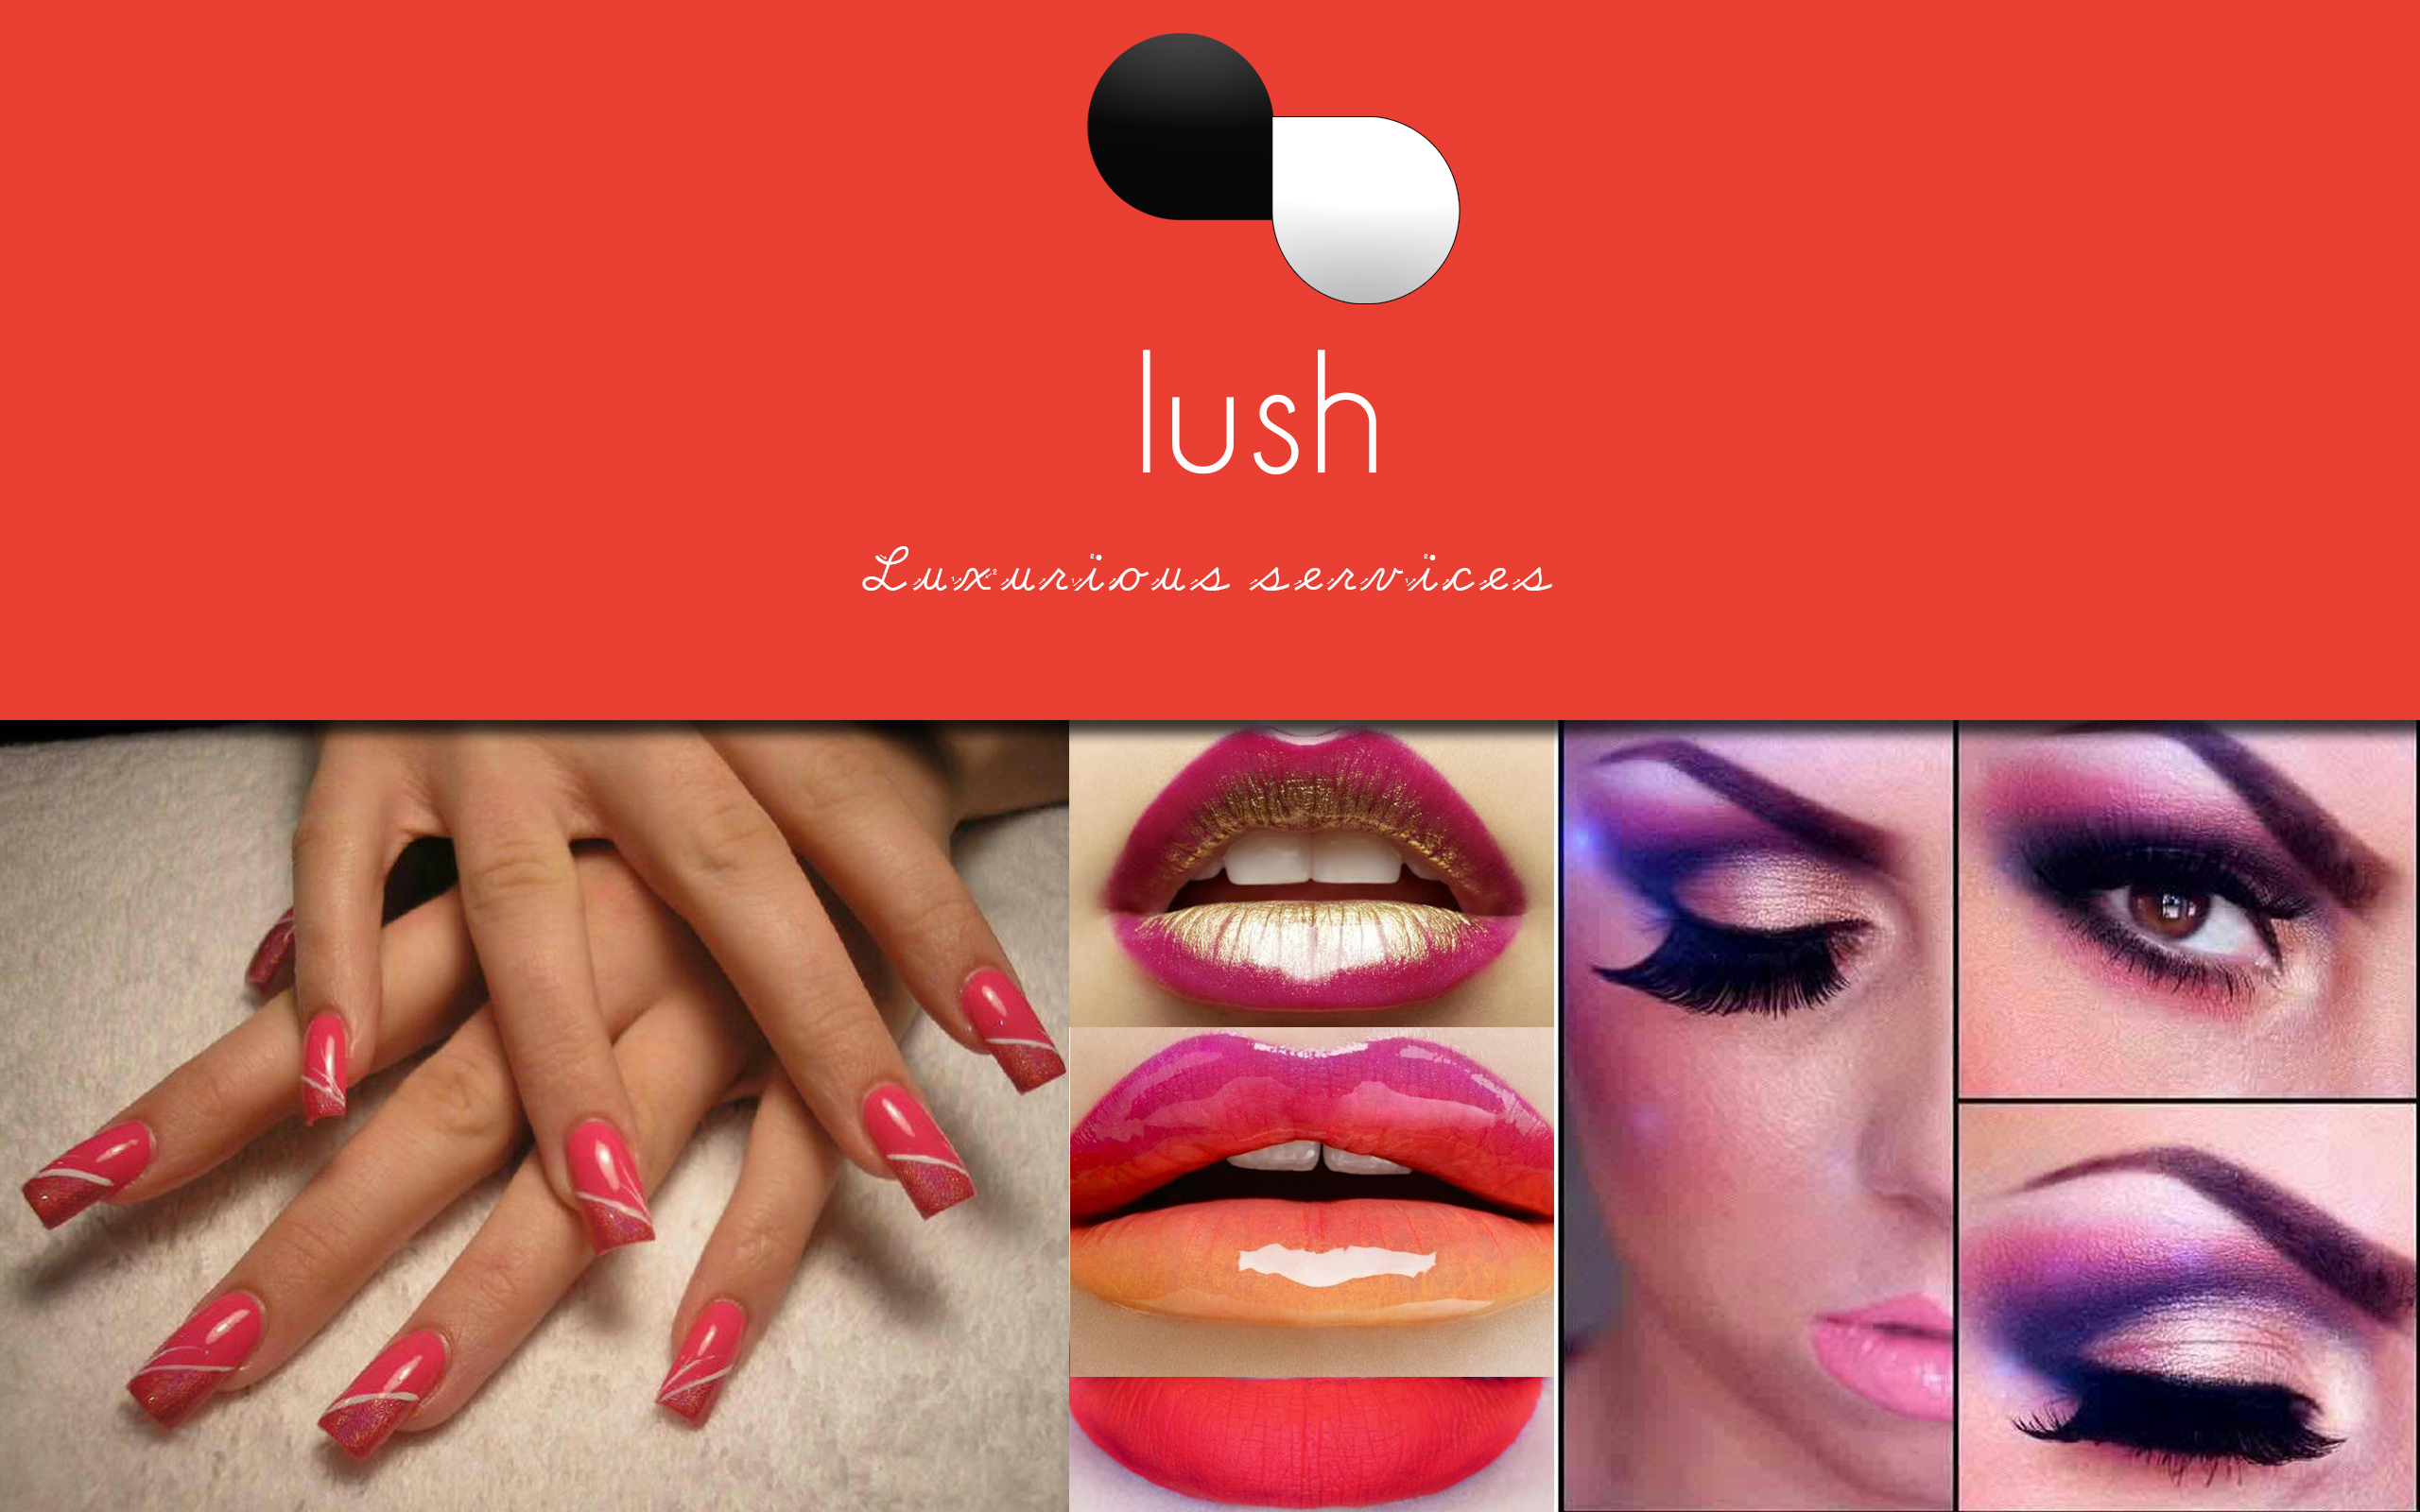 Abdul's portfolio project: Lush logo